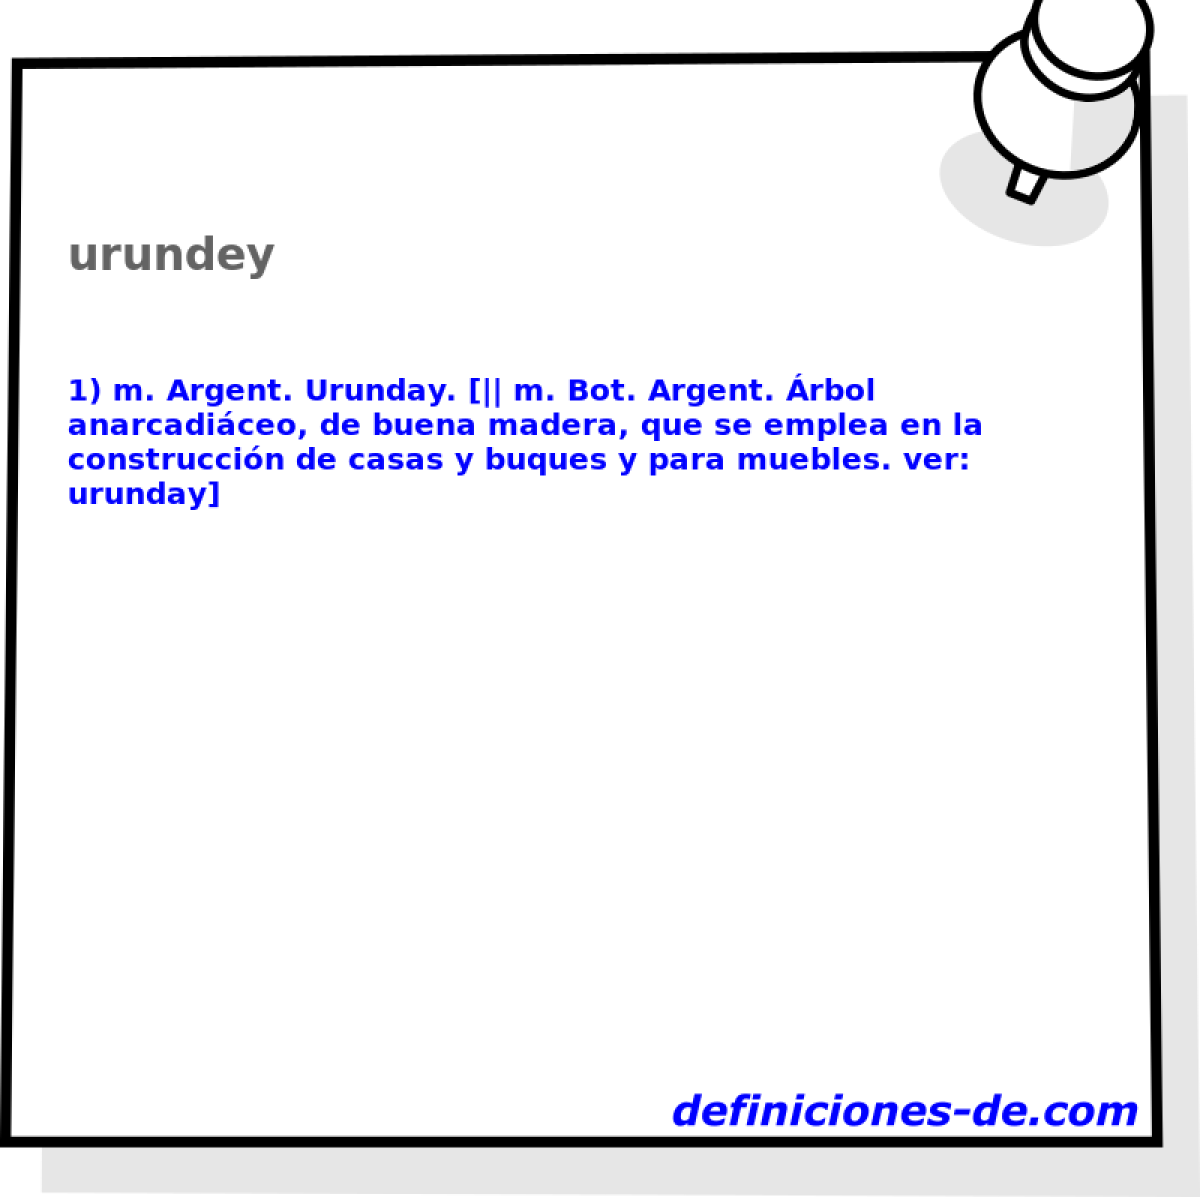 urundey 